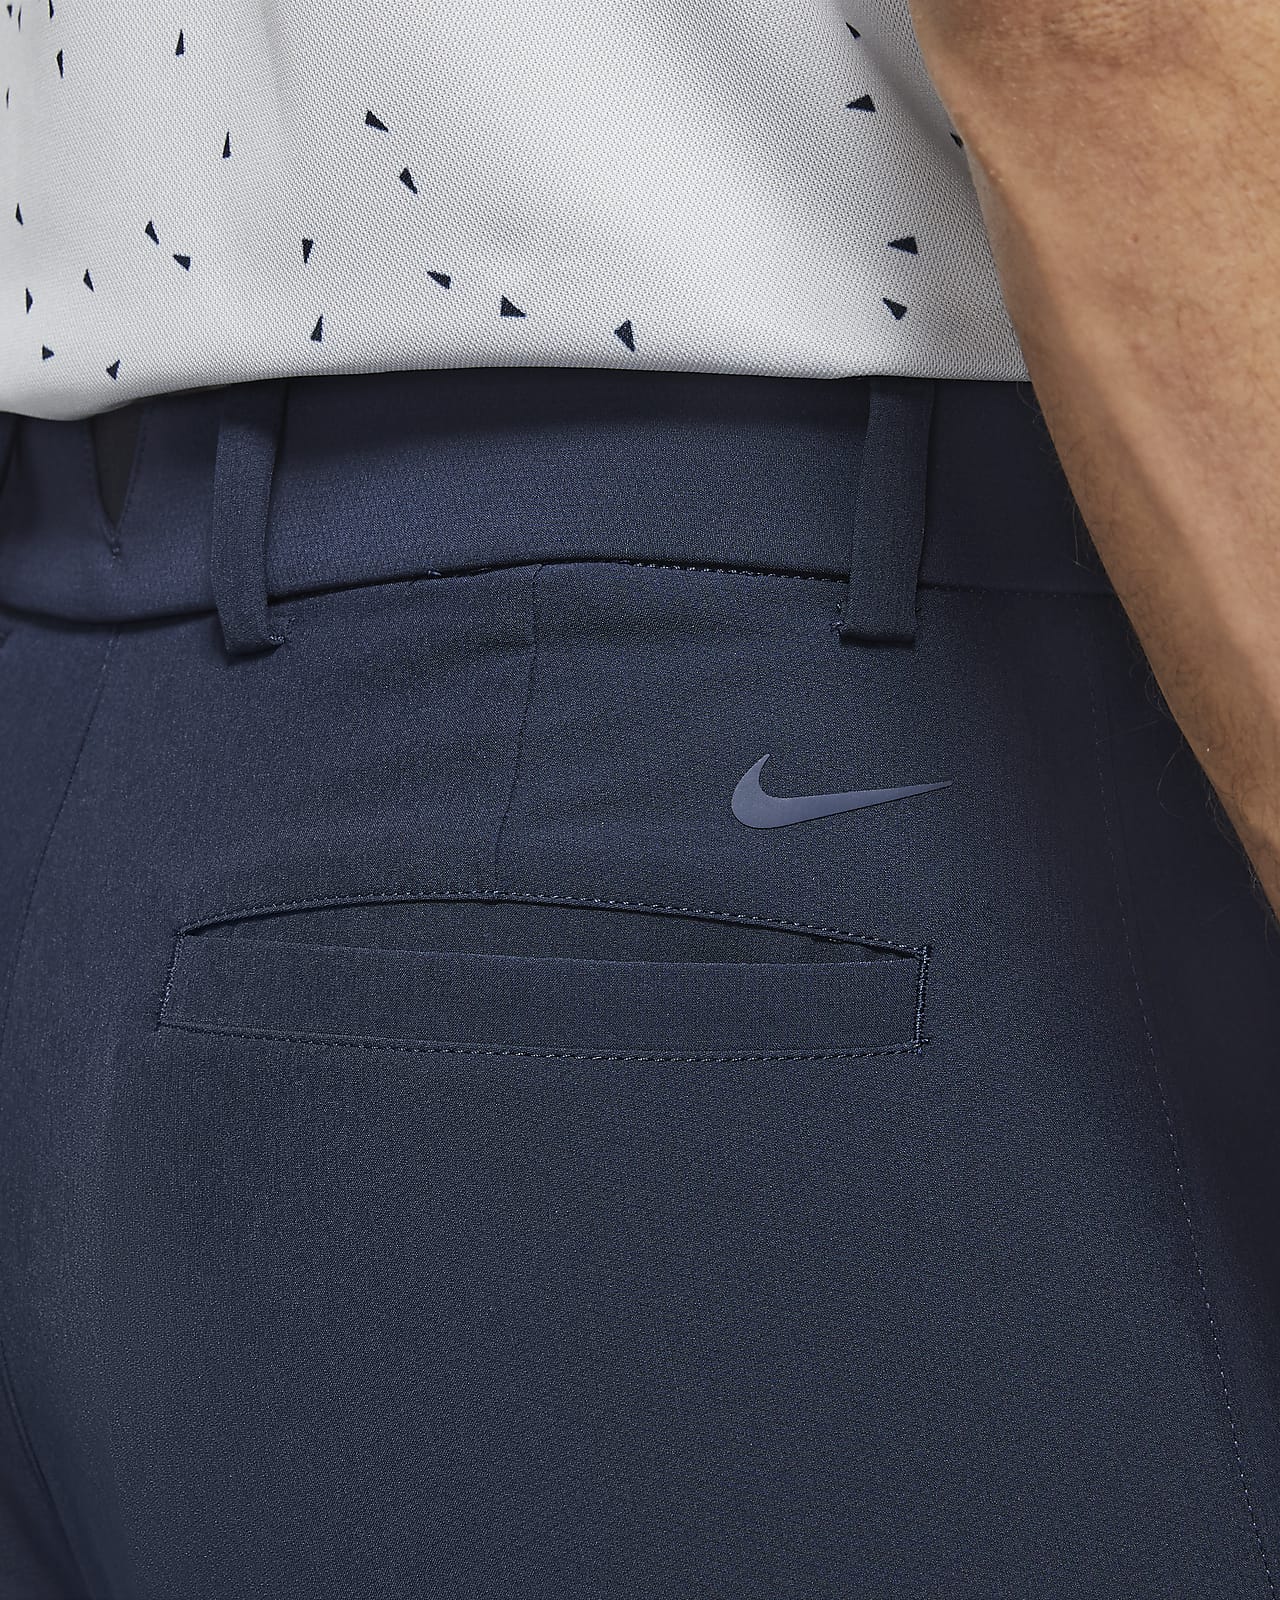 Mossy Oak Stretch Golf Shorts for Men Dry Fit